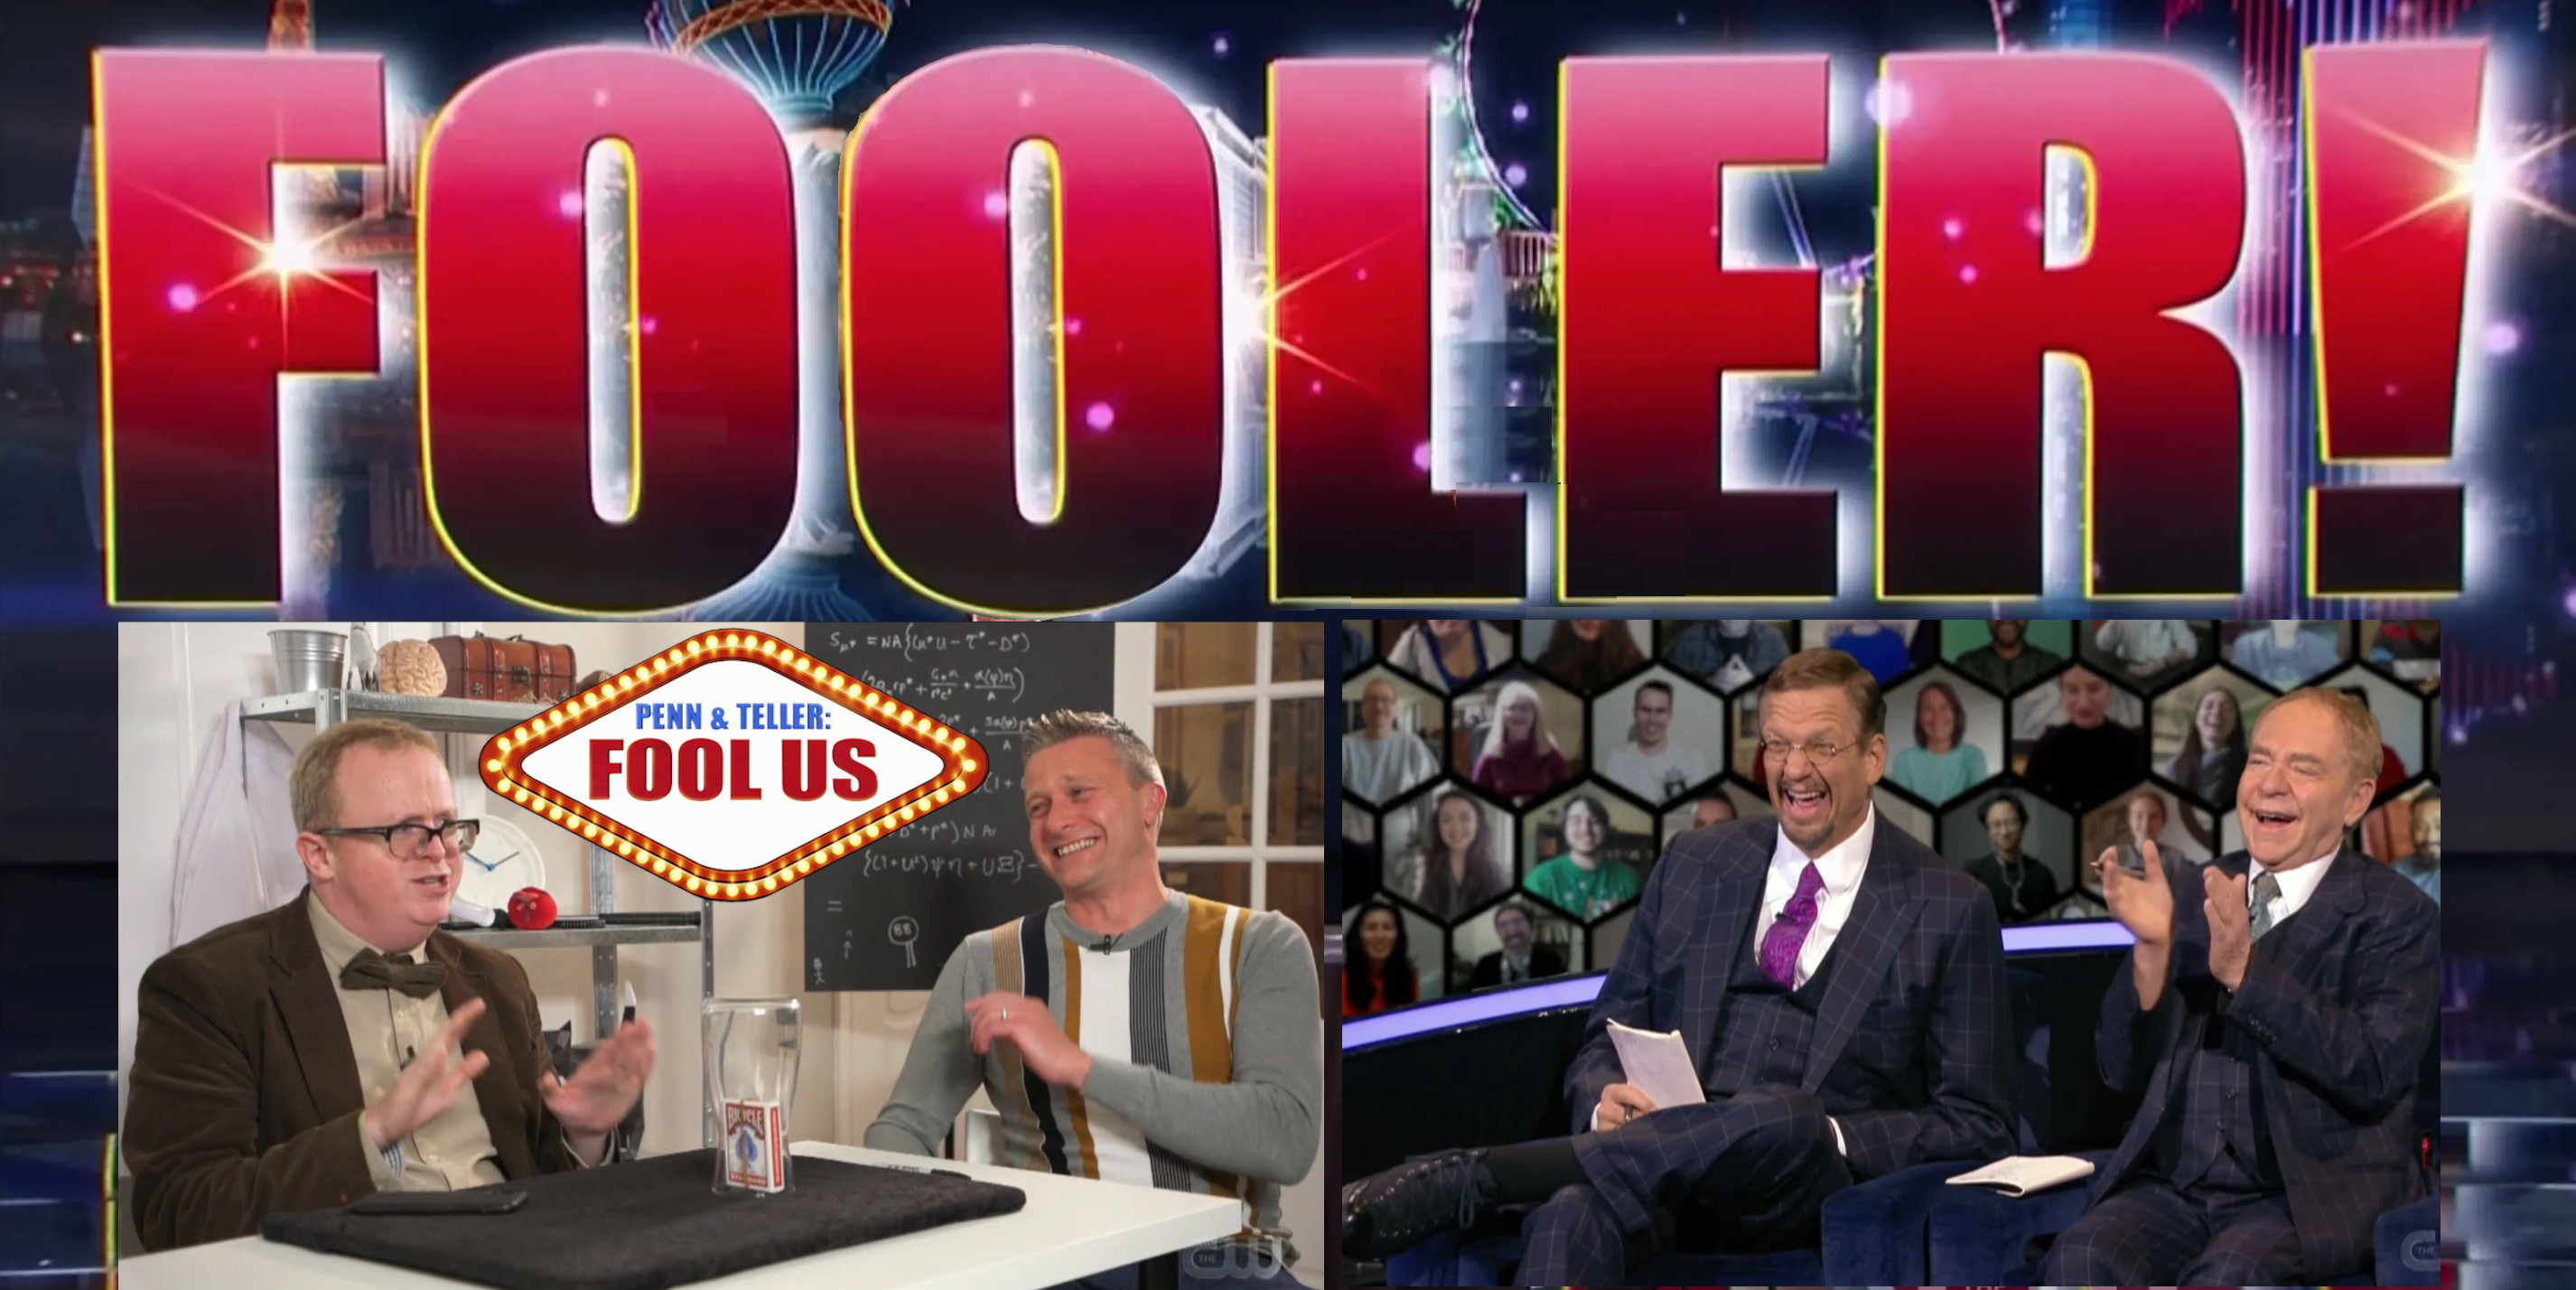 Close up magician Noel Qualter fools Penn & Teller on their hit TV show Penn & Teller Fool Us in February 2021